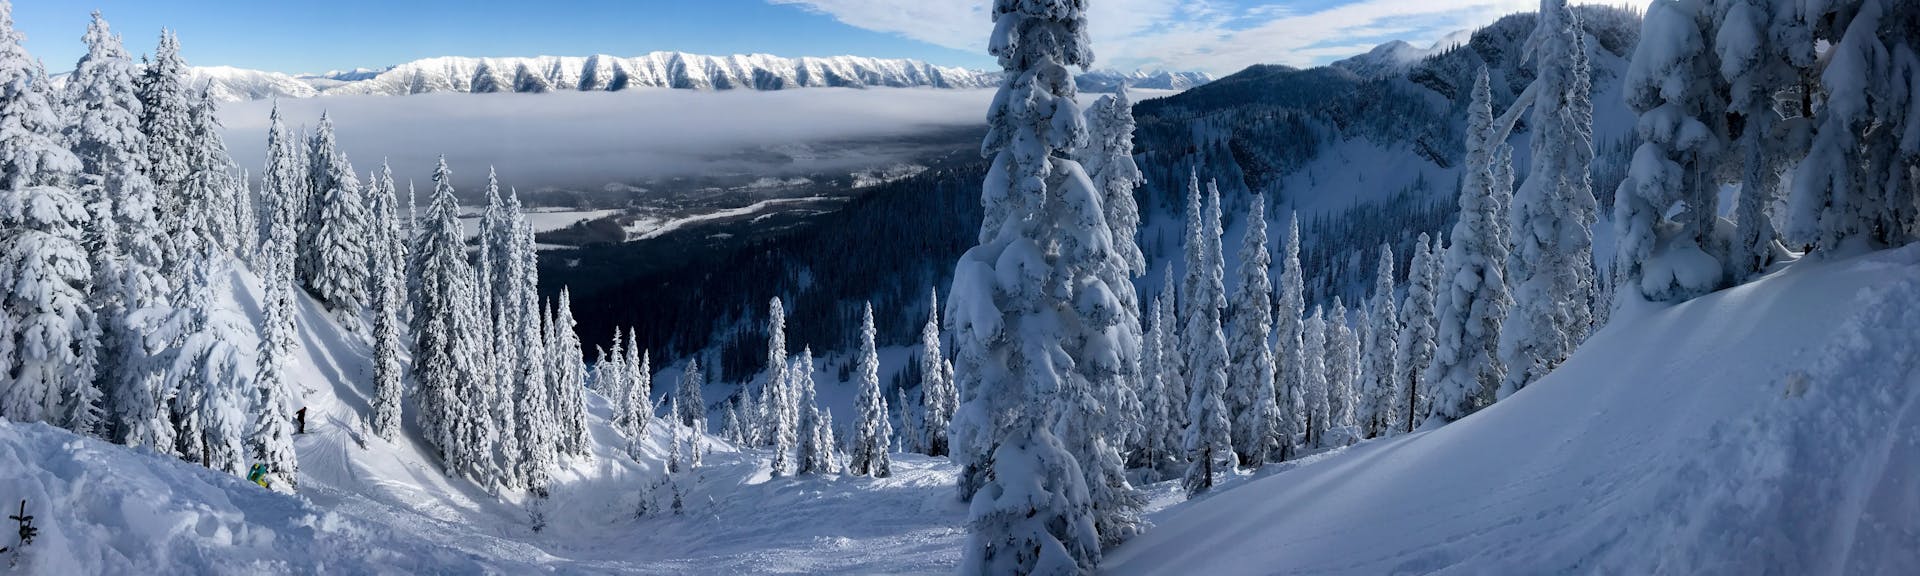 Panoramic shot of Fernie resort's snow covered trees